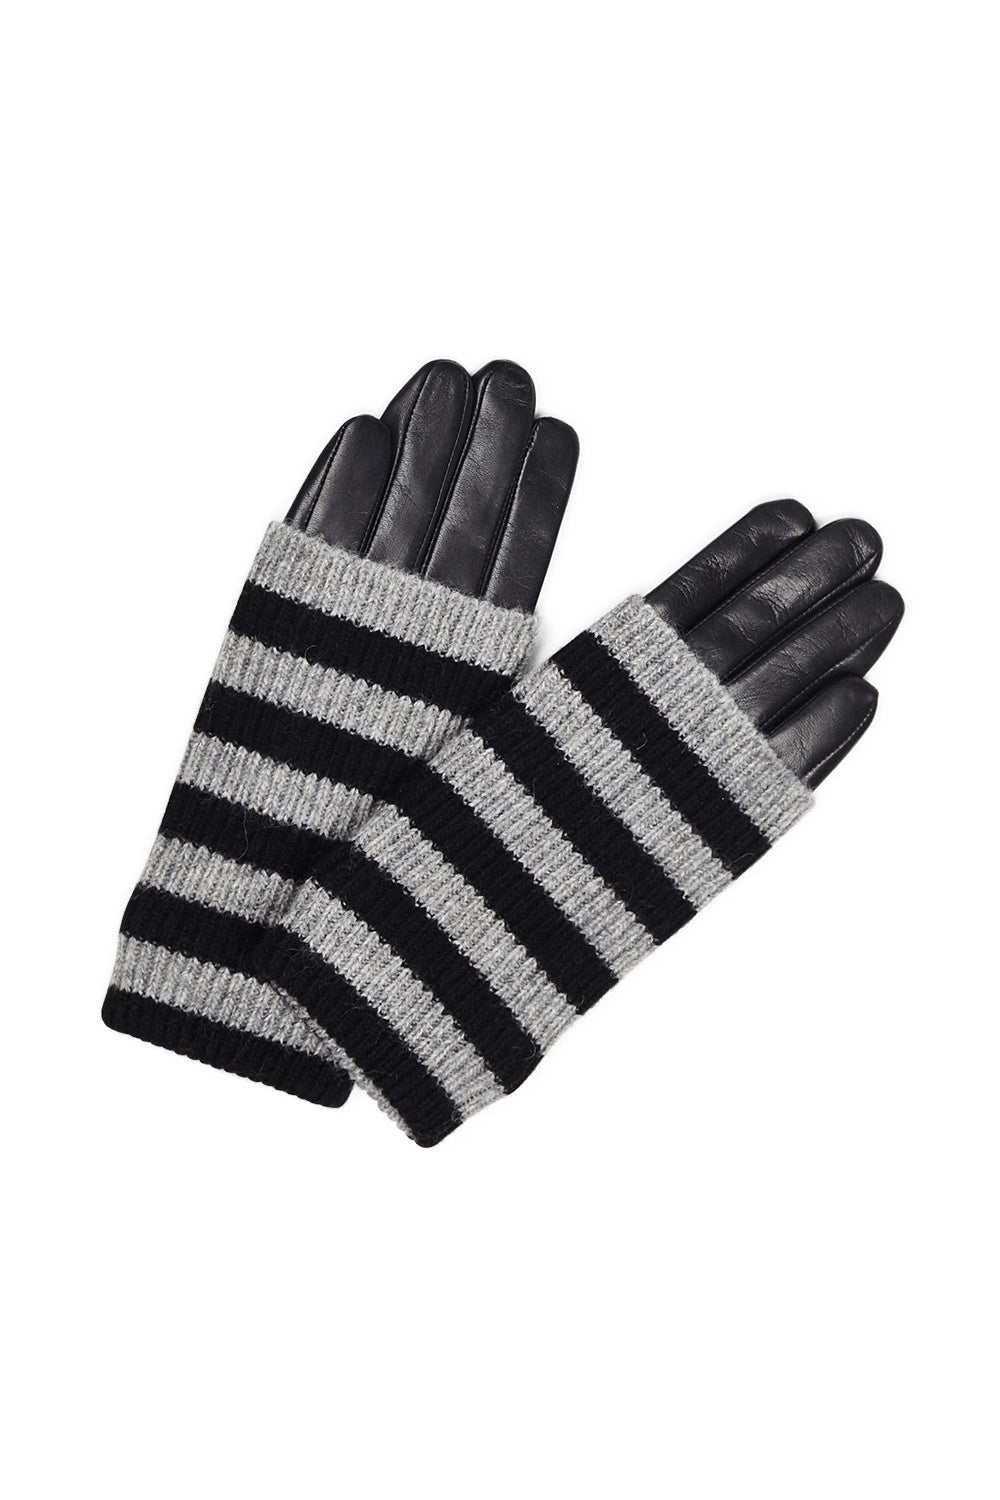 Helly Glove - Black w. Stripes